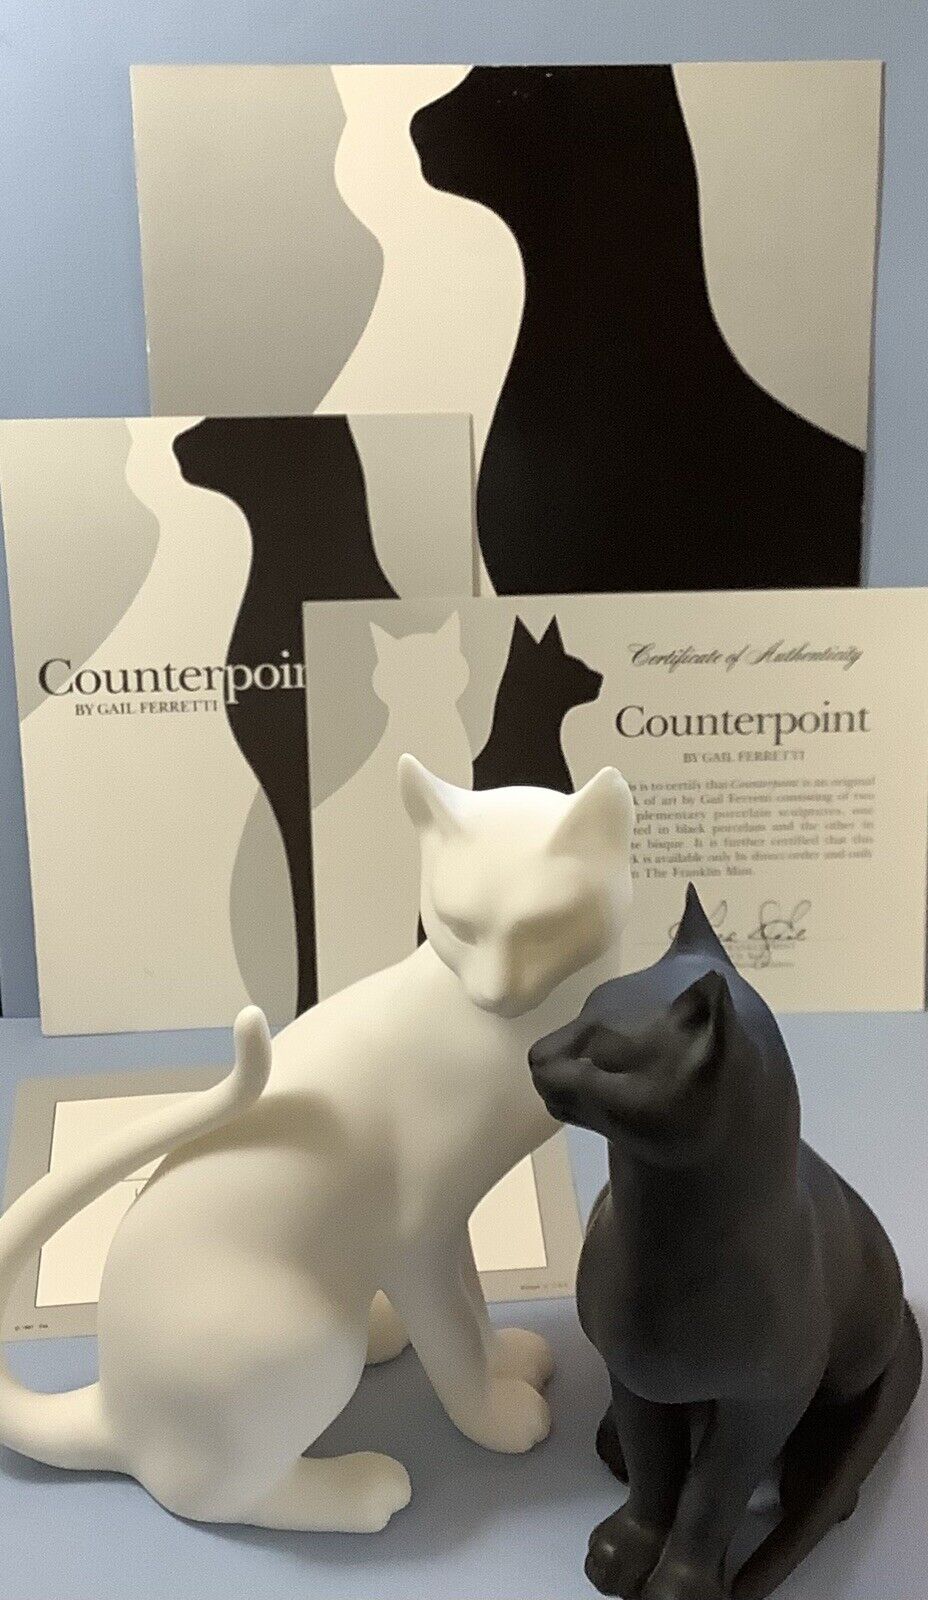 SALE $23 “Counterpoint” Pair Cat Figurines BlK Porcelain &Wt Bisque COA Ferretti